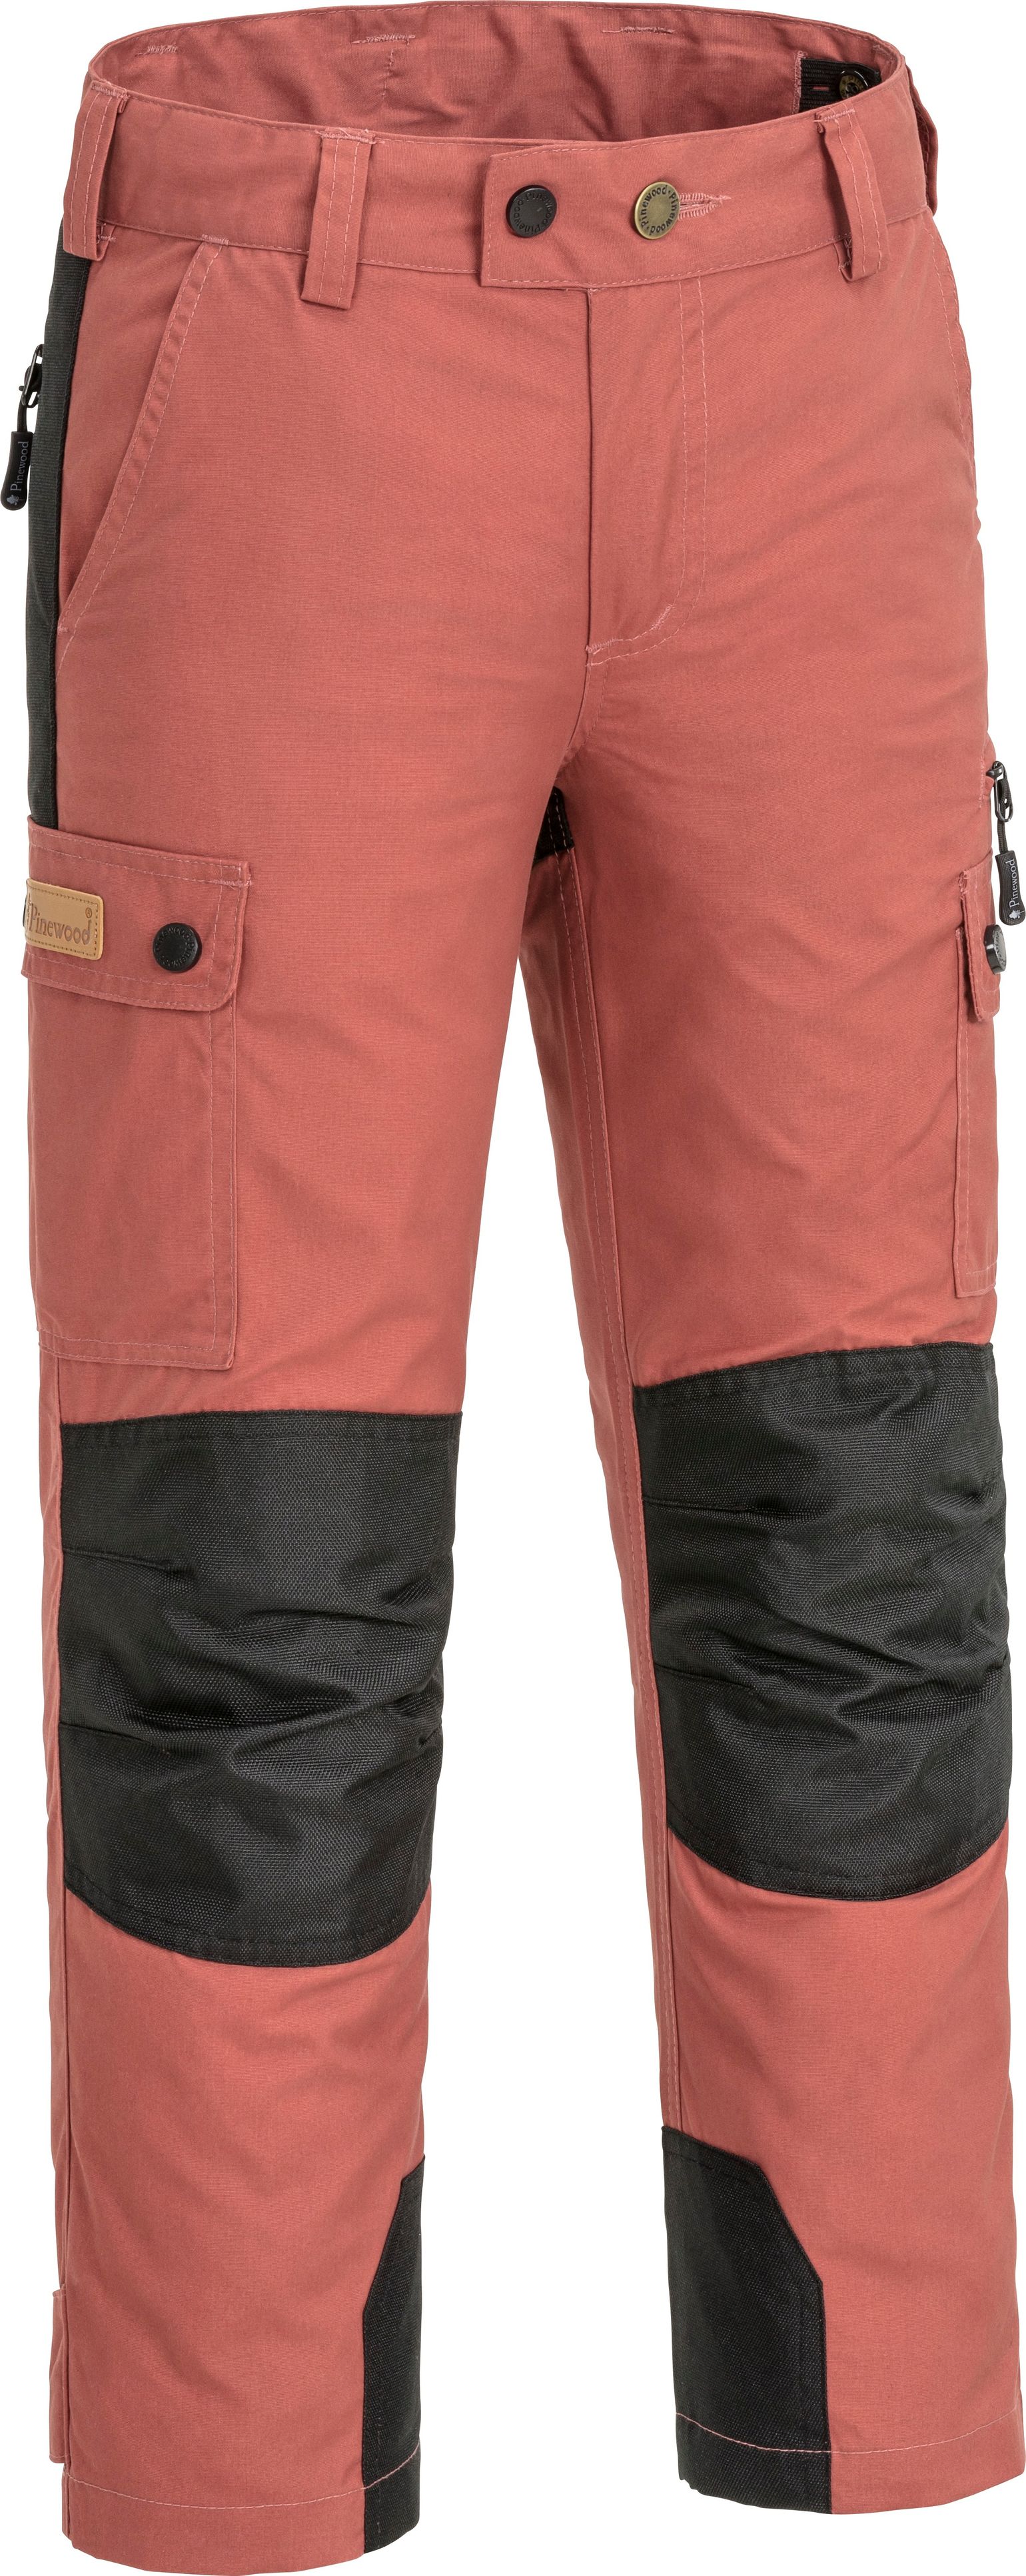 Kids' Lappland Trousers Rusty Pink/Black